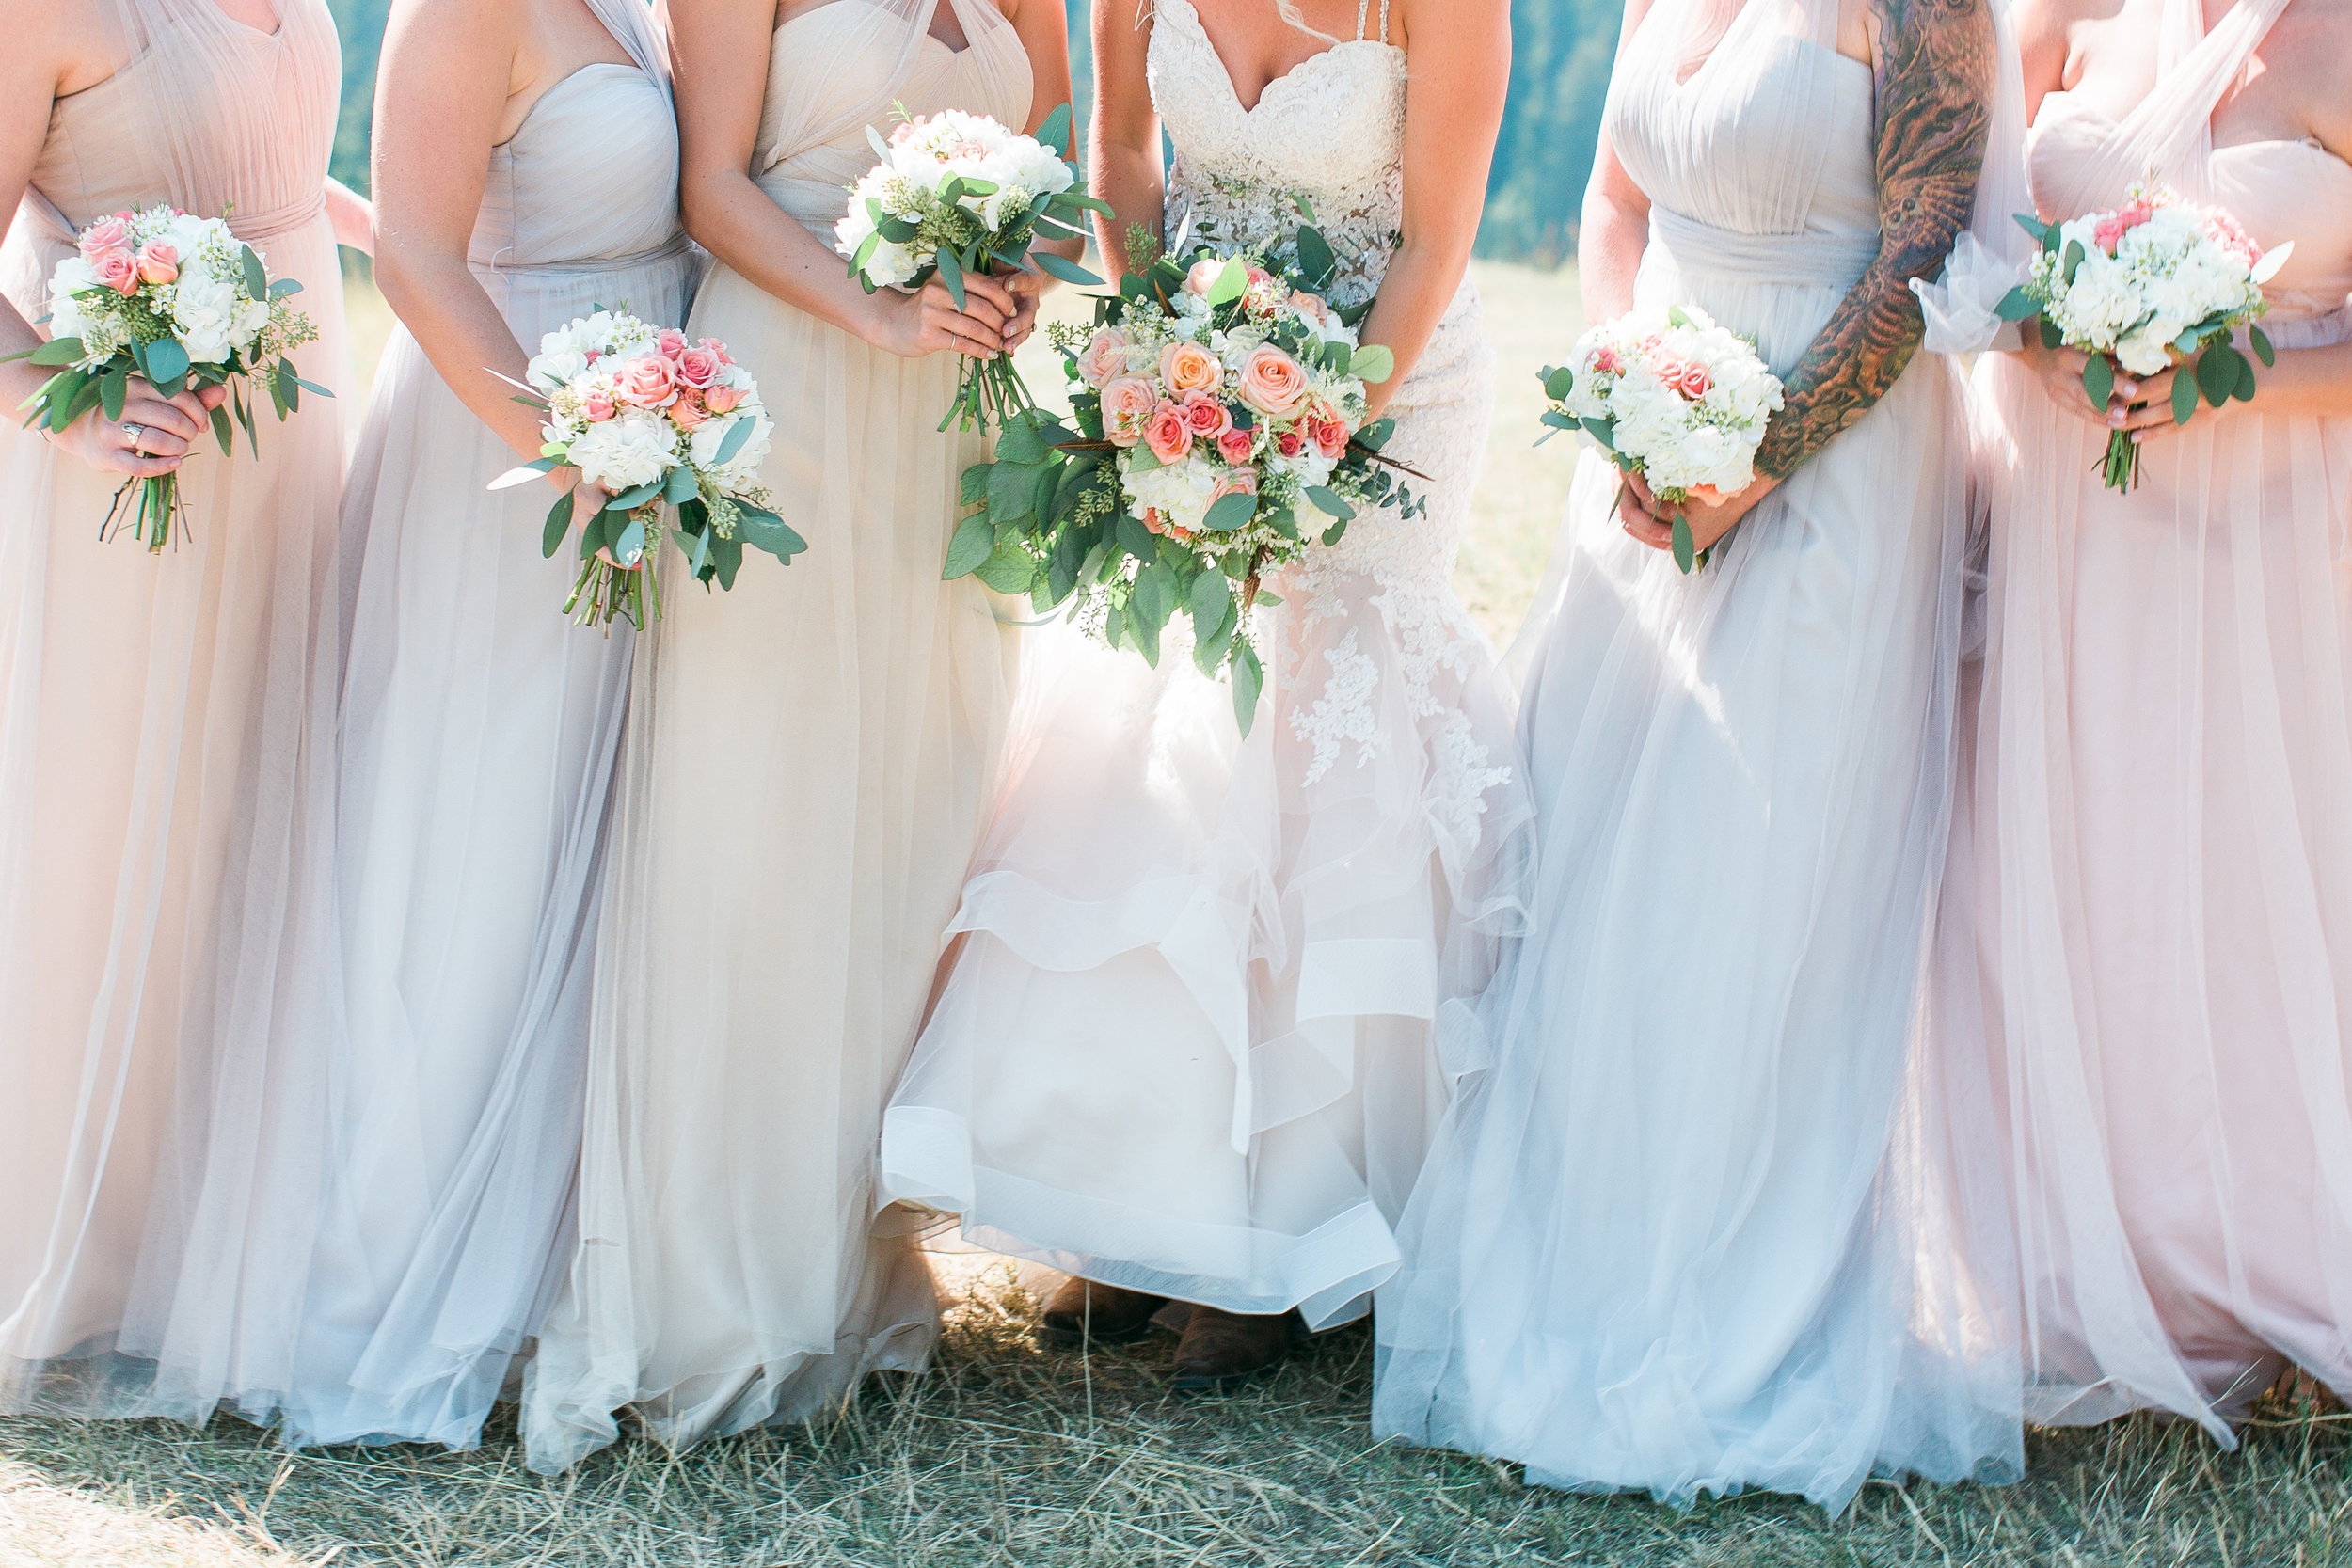 Bridesmaids in blush neutral dresses holding flowers Minnesota wedding photography mallory kiesow photography